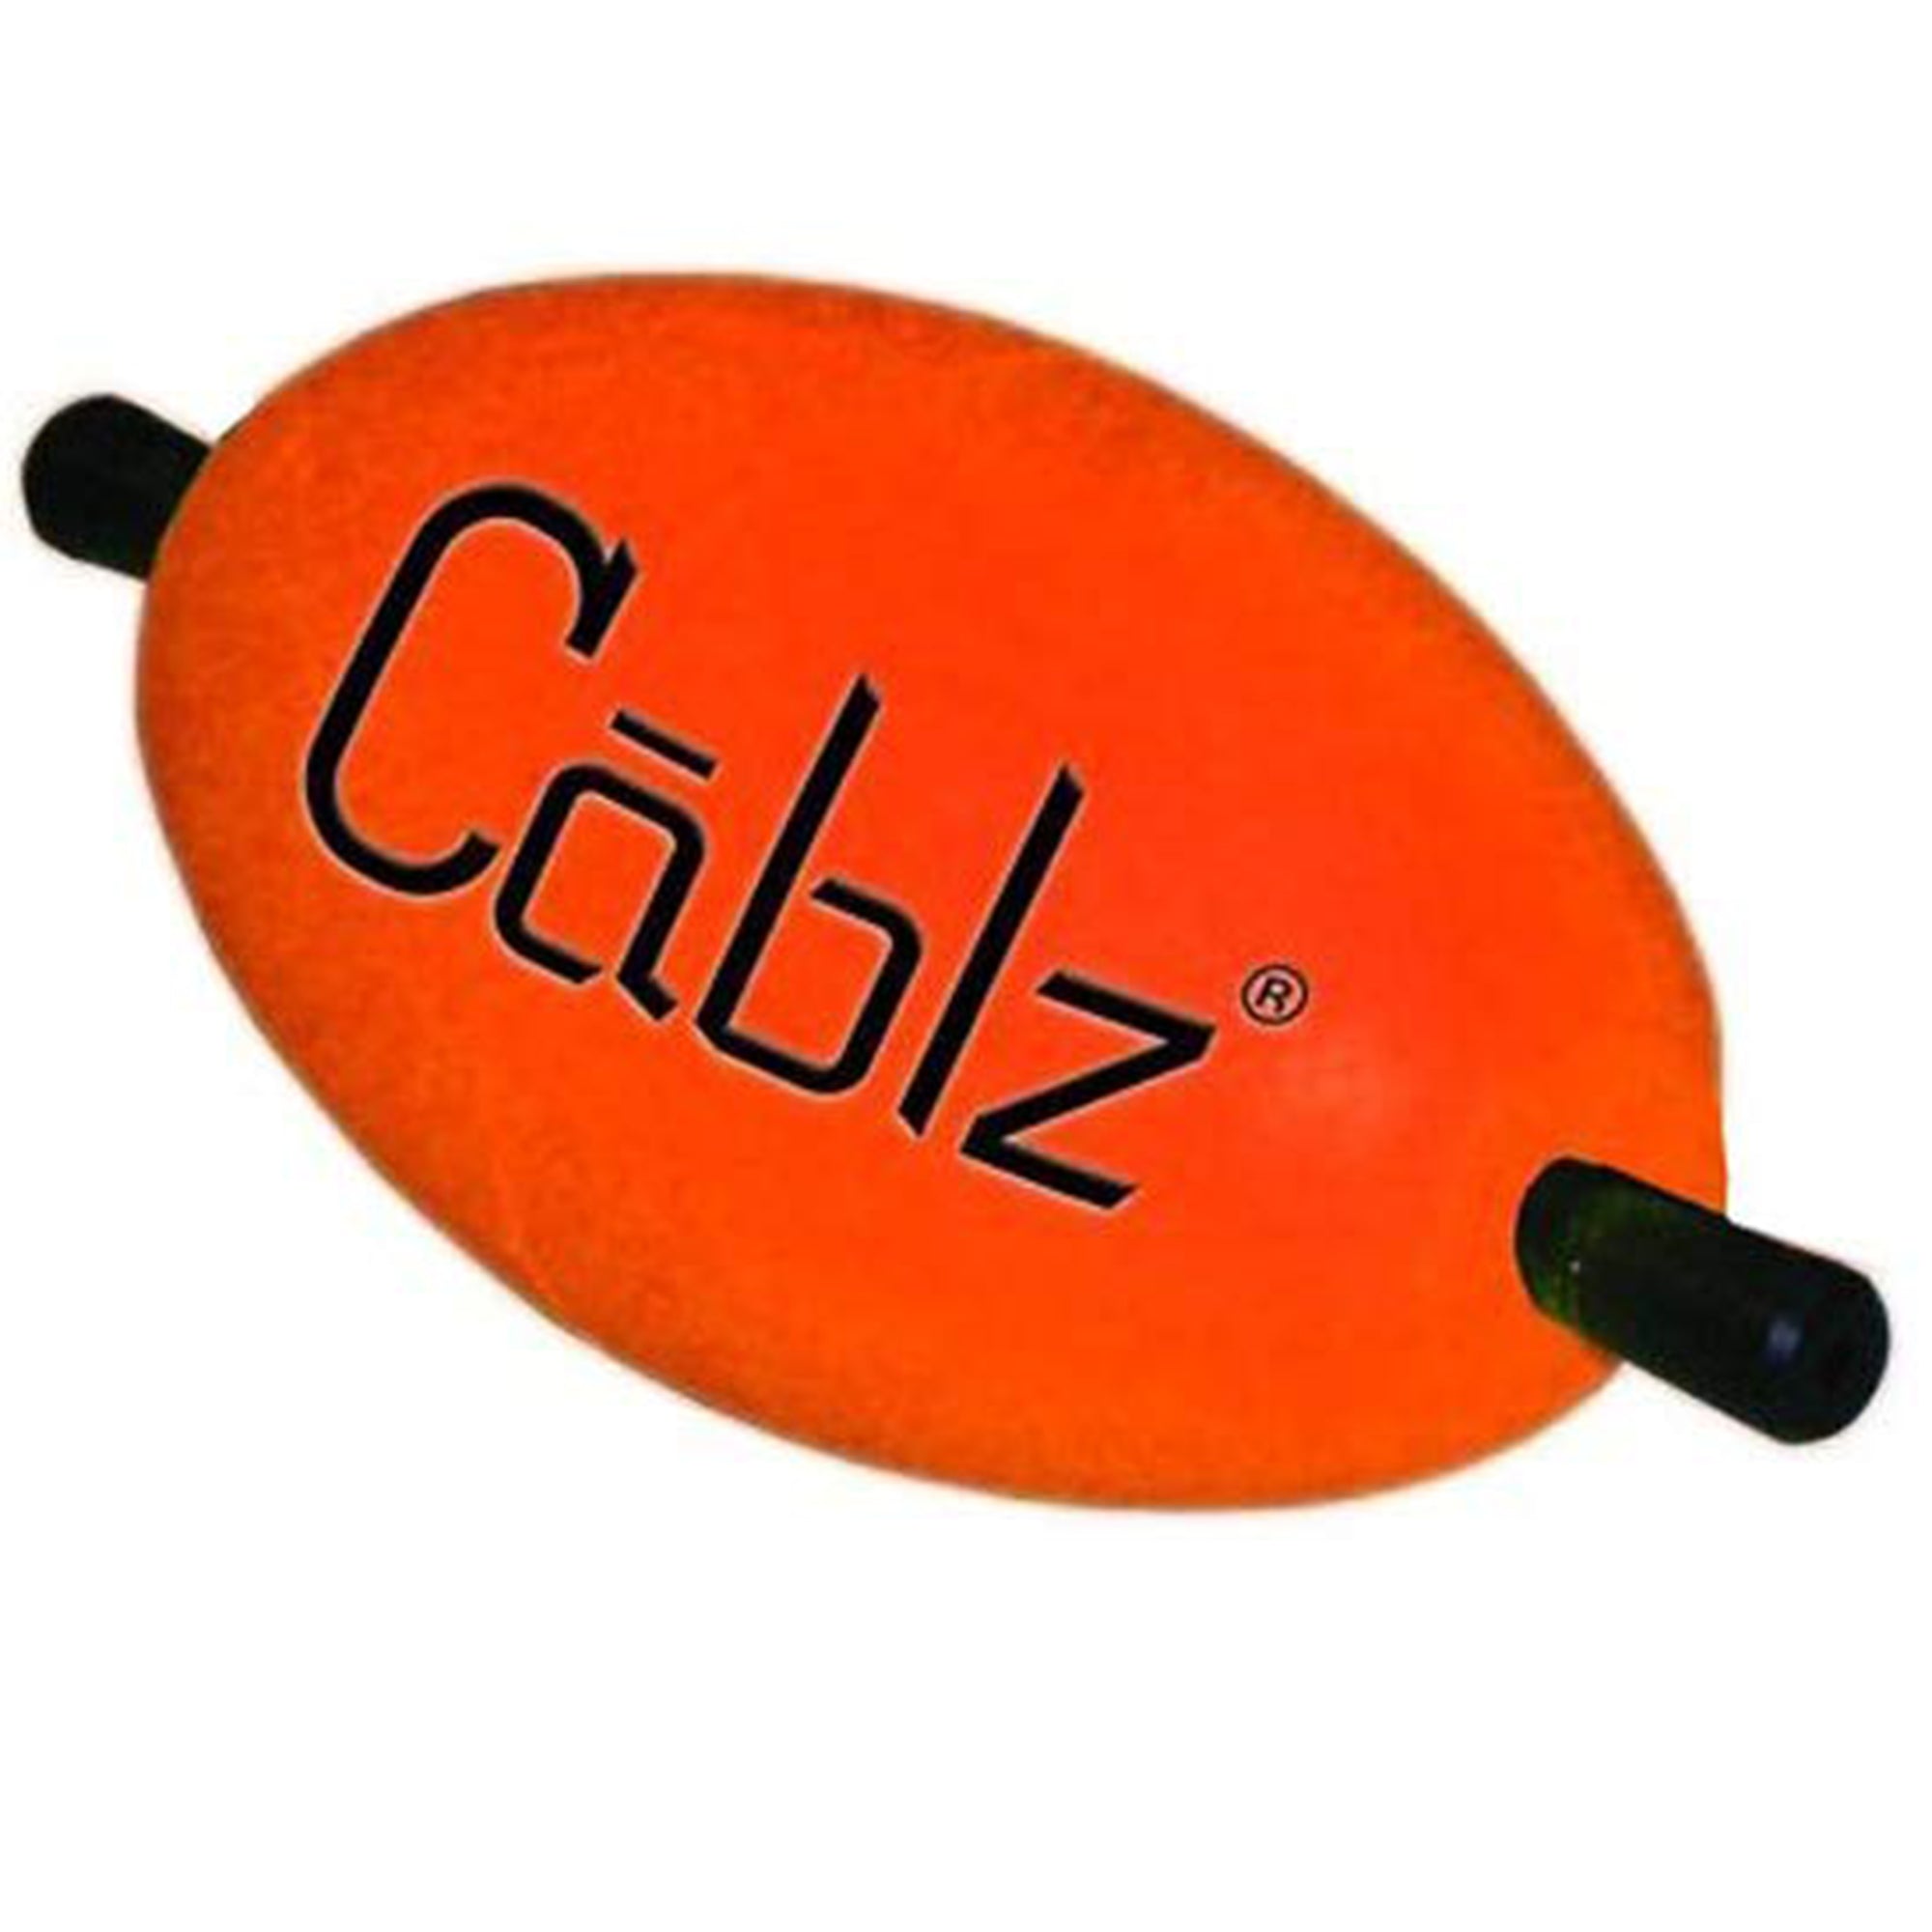 Orange Cablz Flotz